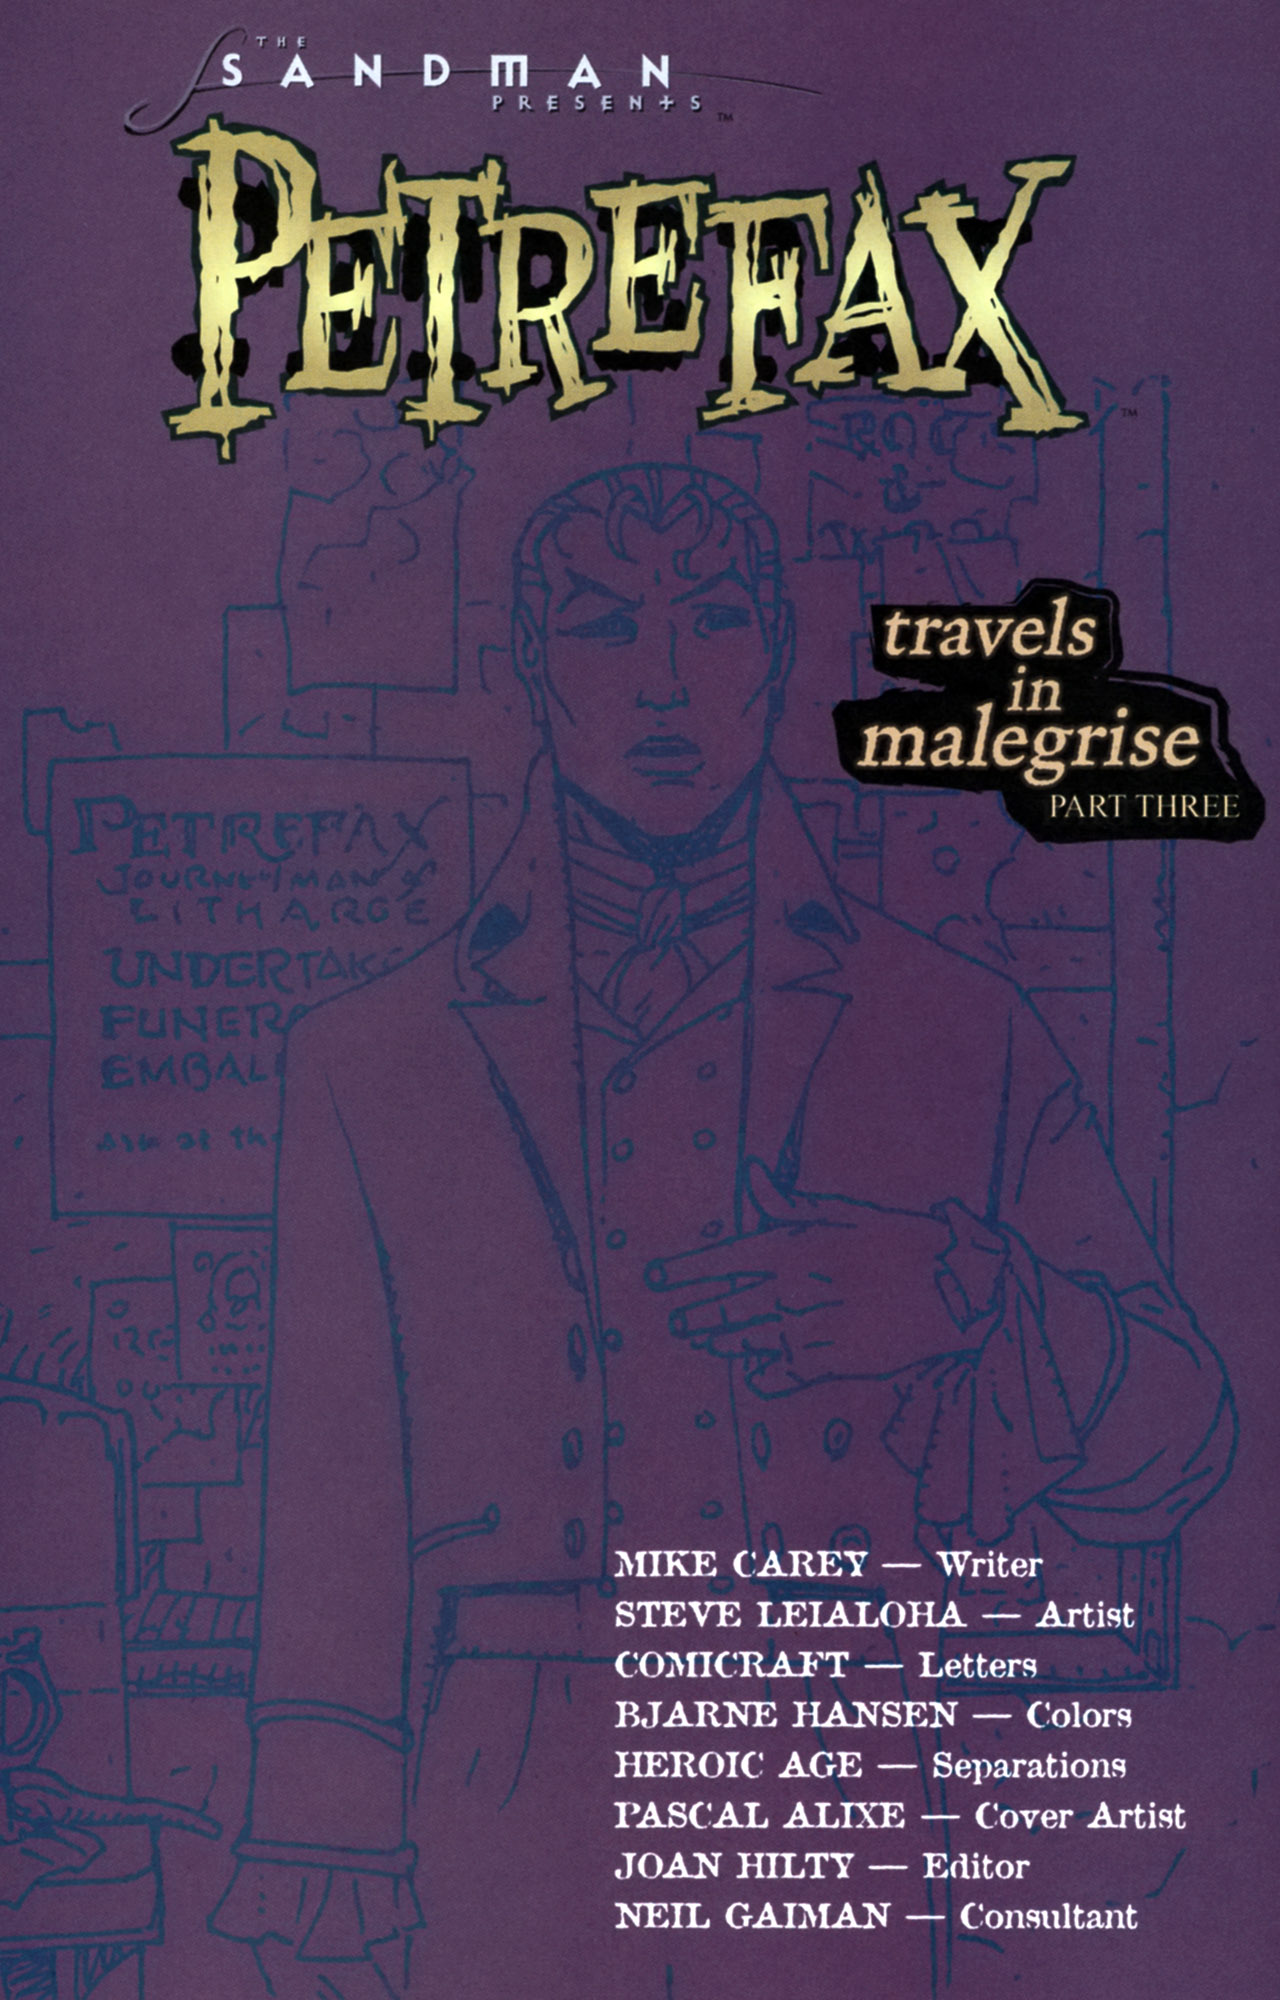 Read online Sandman Presents: Petrefax comic -  Issue #3 - 2